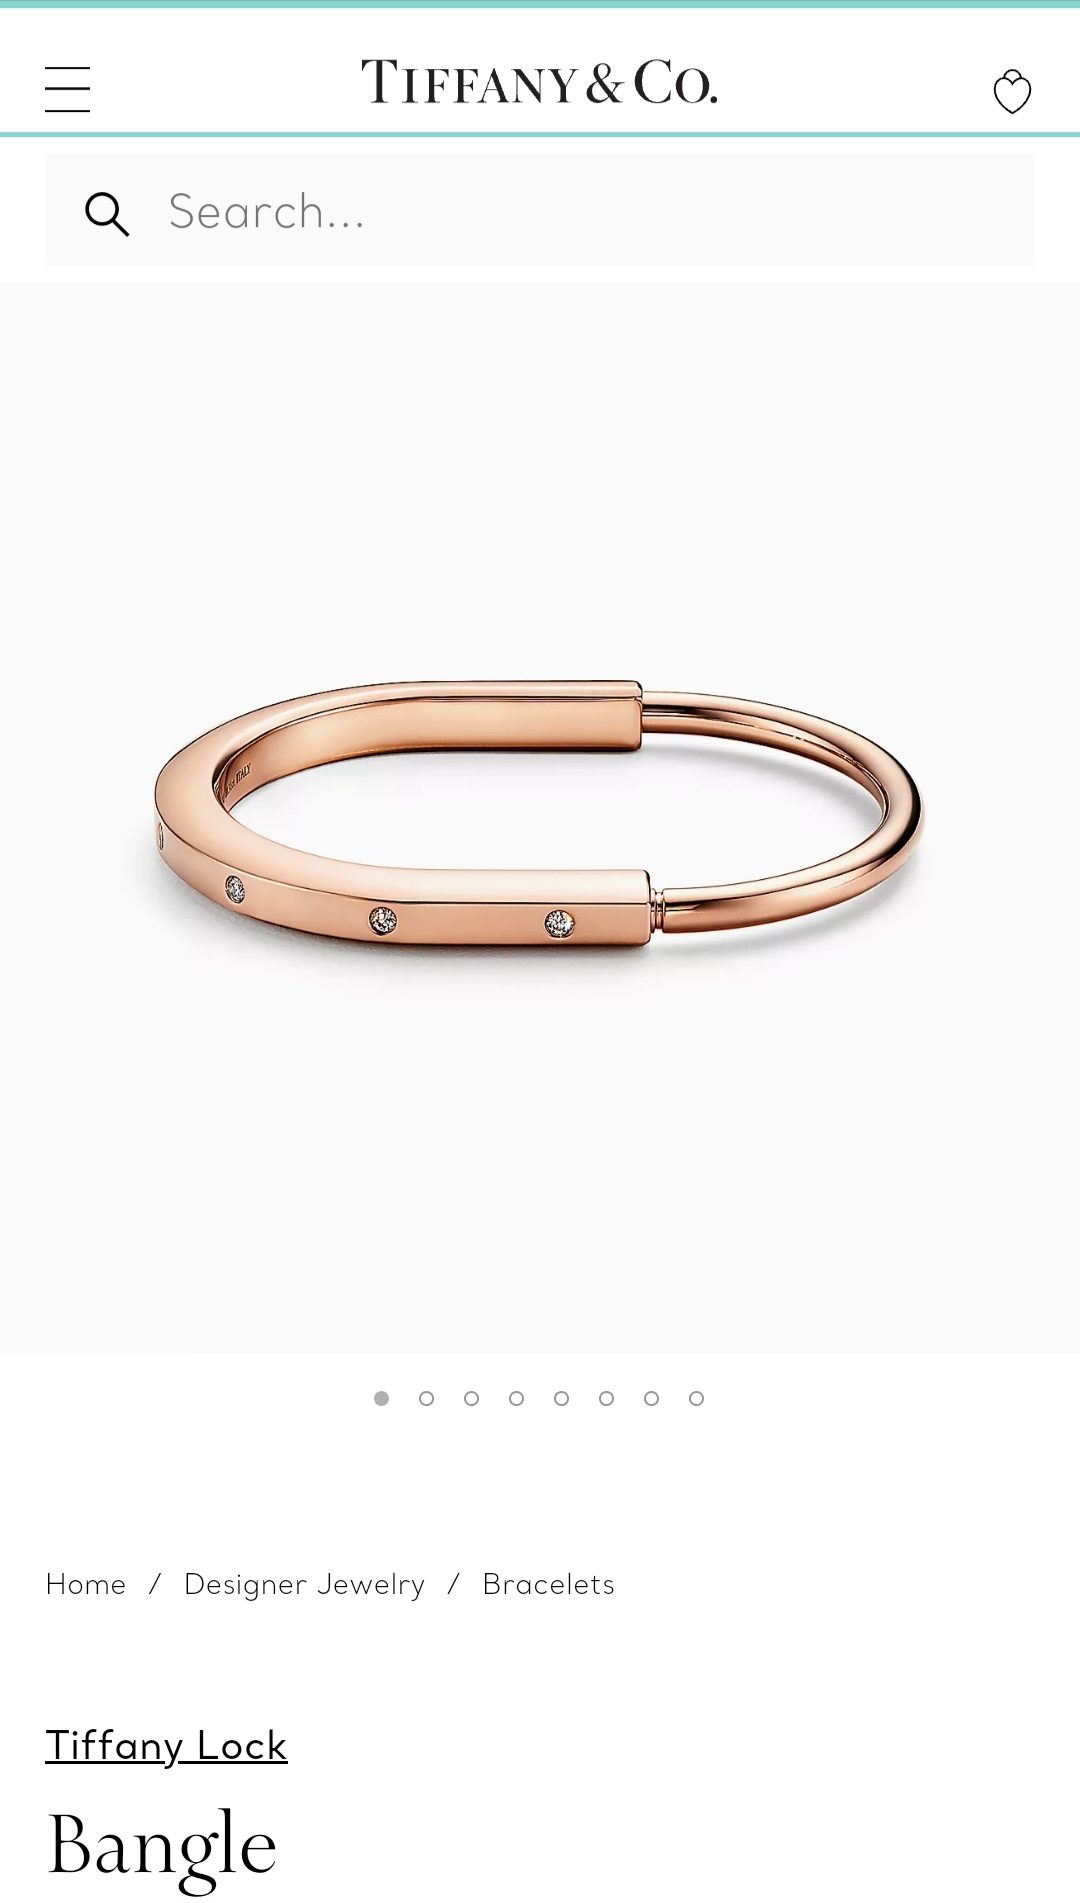 Tiffany & co T1 Lock bangle bracelet